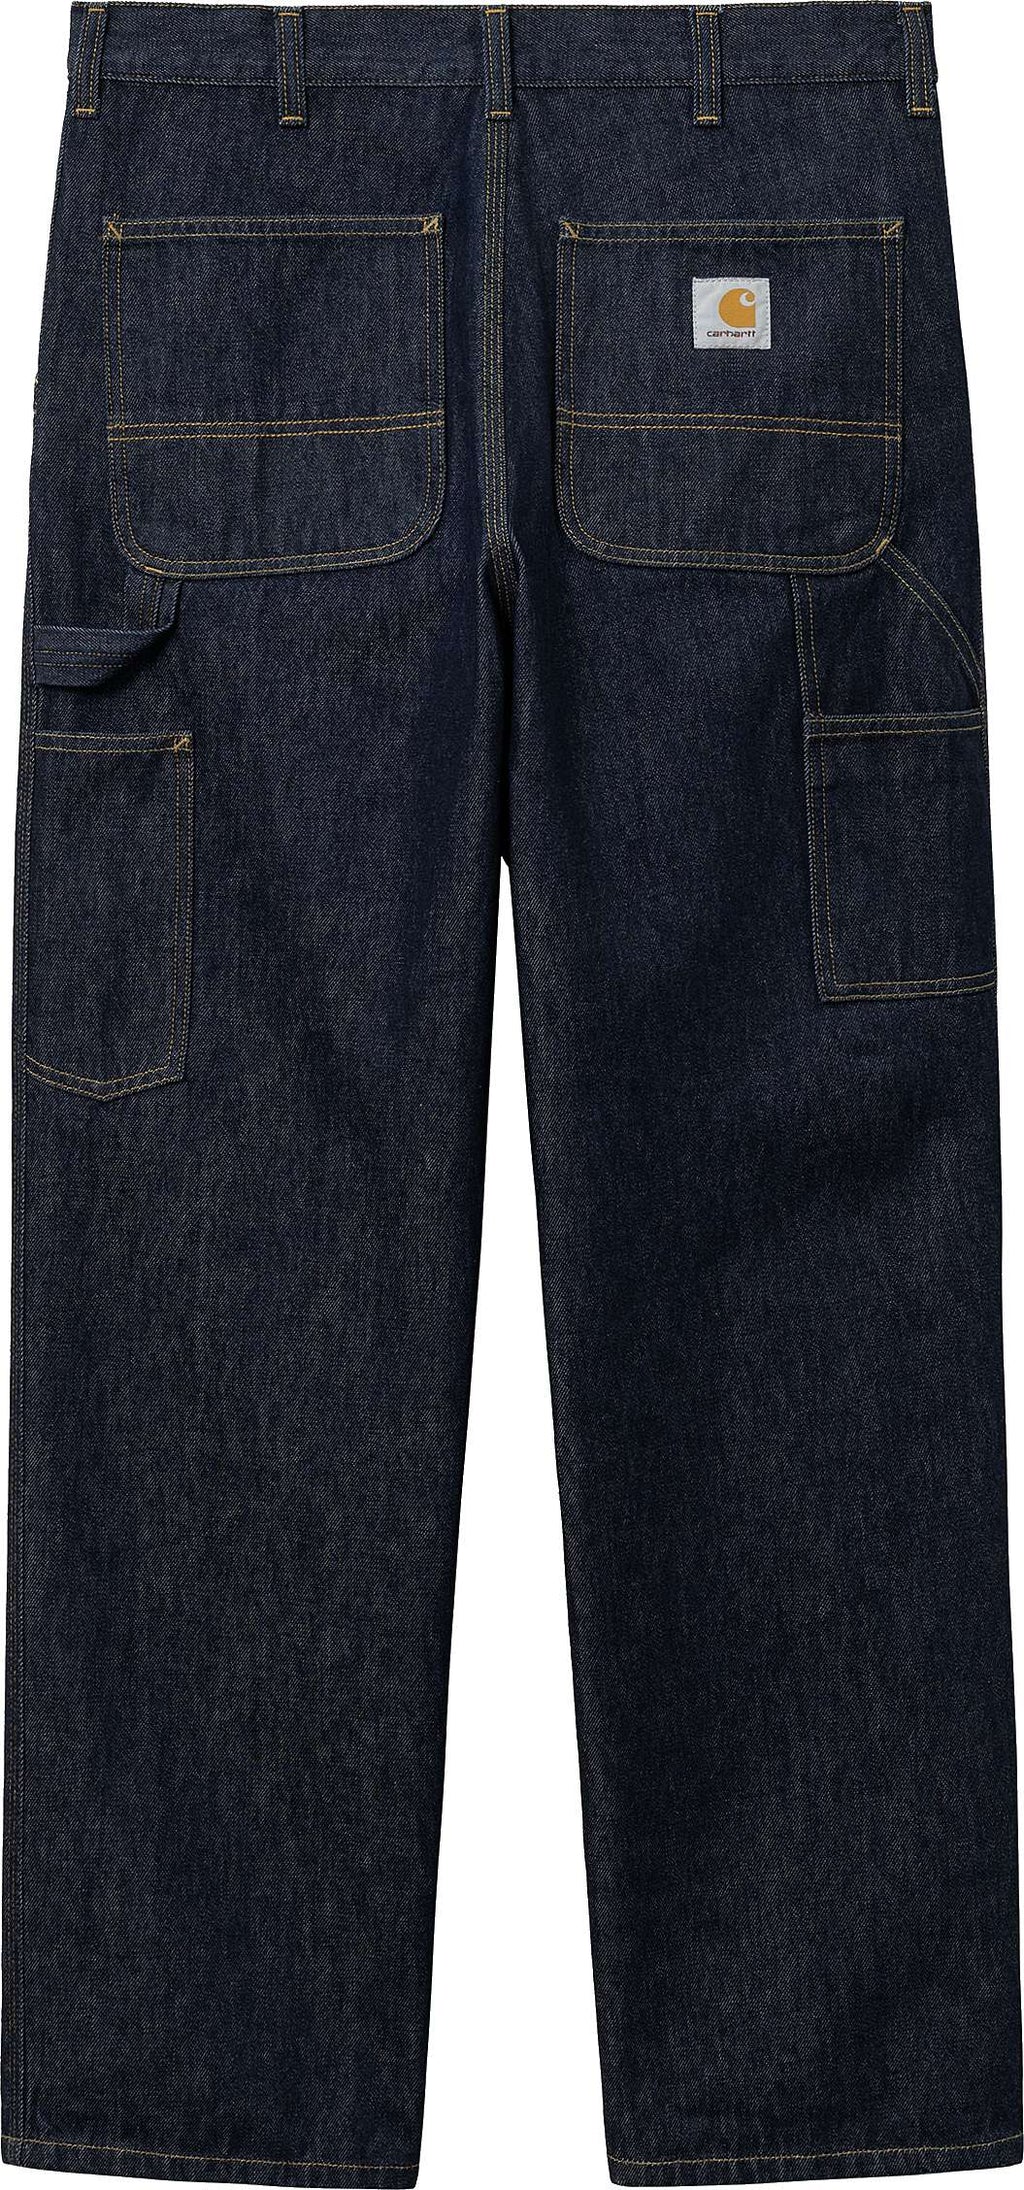  Carhartt Wip Pantaloni Single Knee Pant Blue Rinsed Uomo - 1